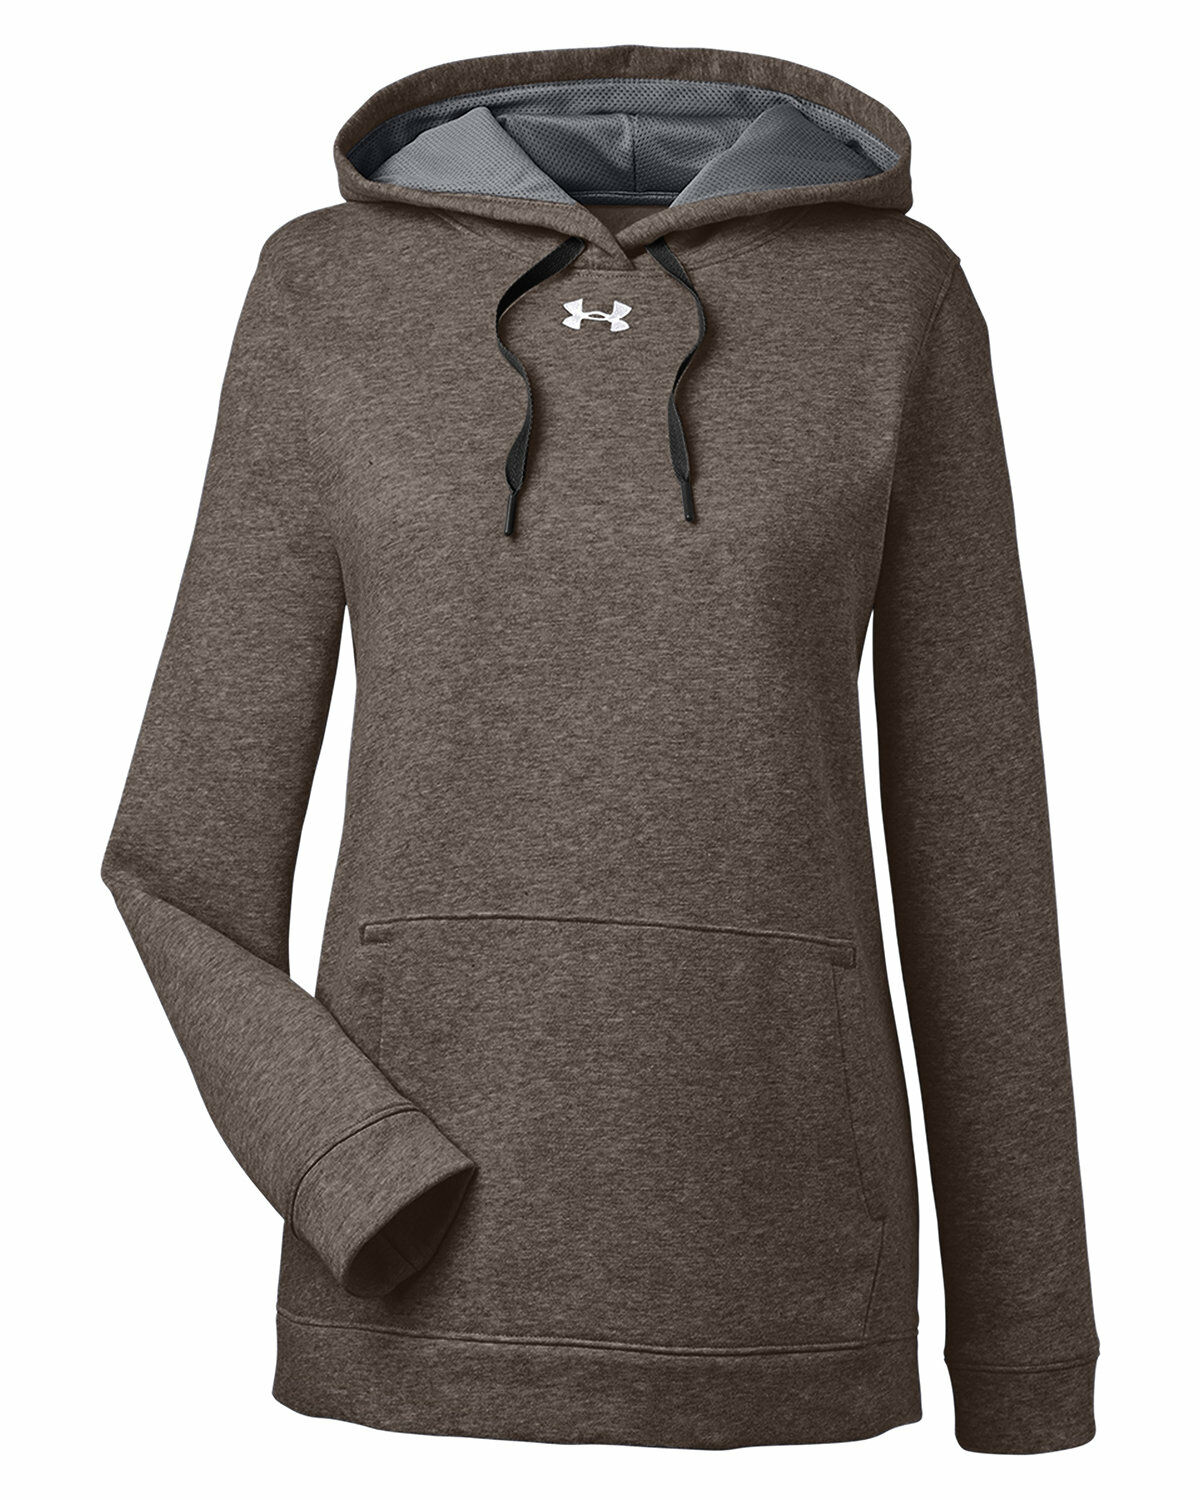 https://www.drivemerch.com/wp-content/uploads/2022/03/branded-under-armour-ladies-hustle-pullover-hooded-sweatshirt-carbon-heather-grey.jpg